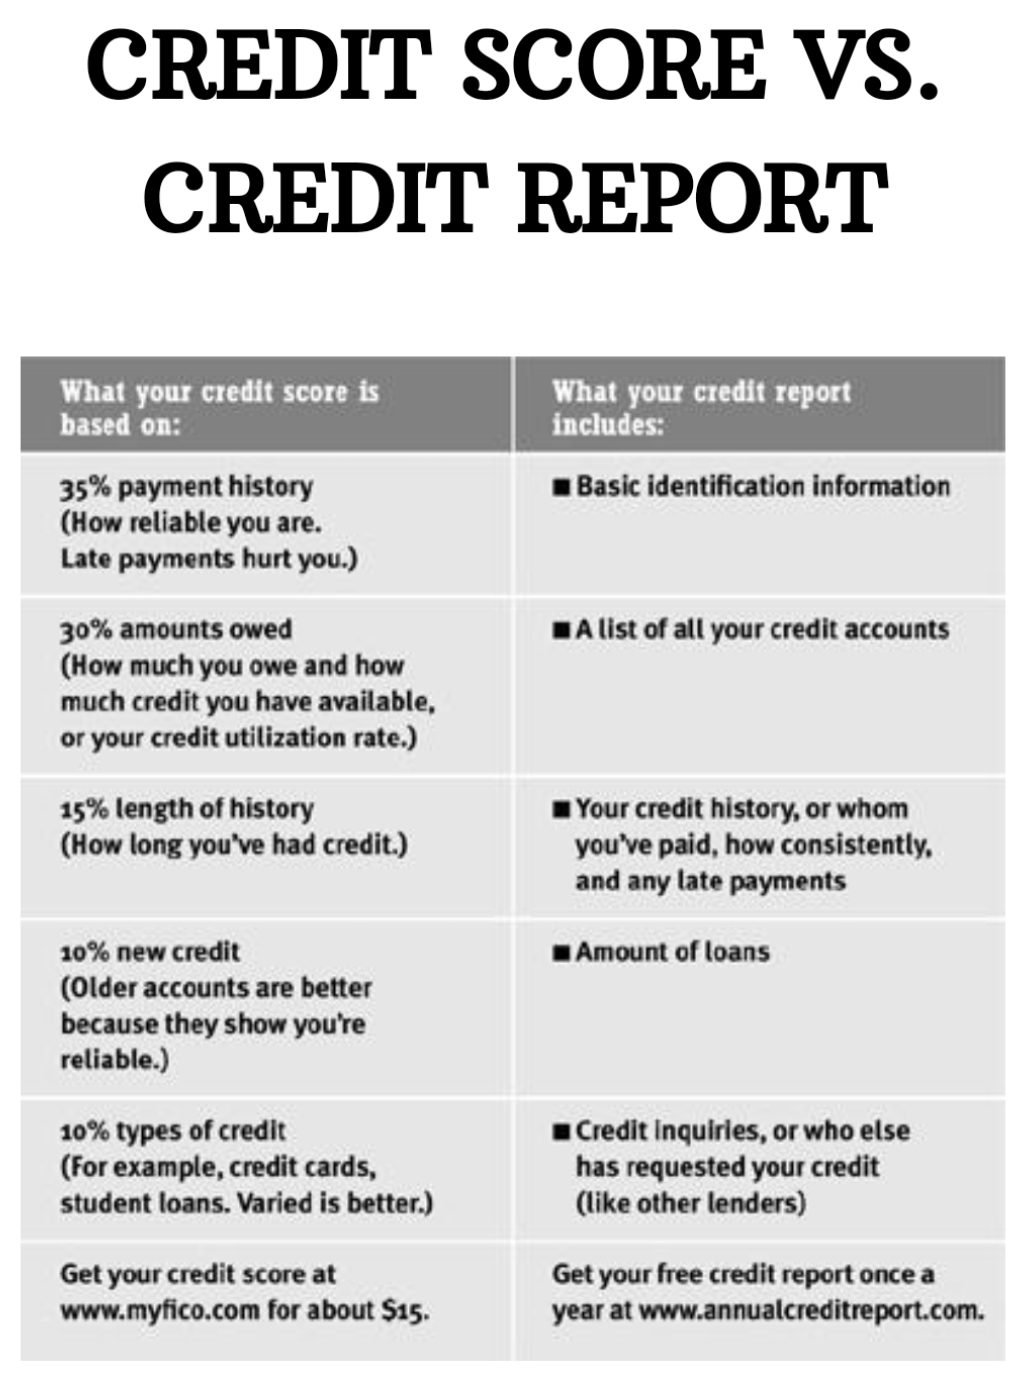 Credit Score and Credit Report